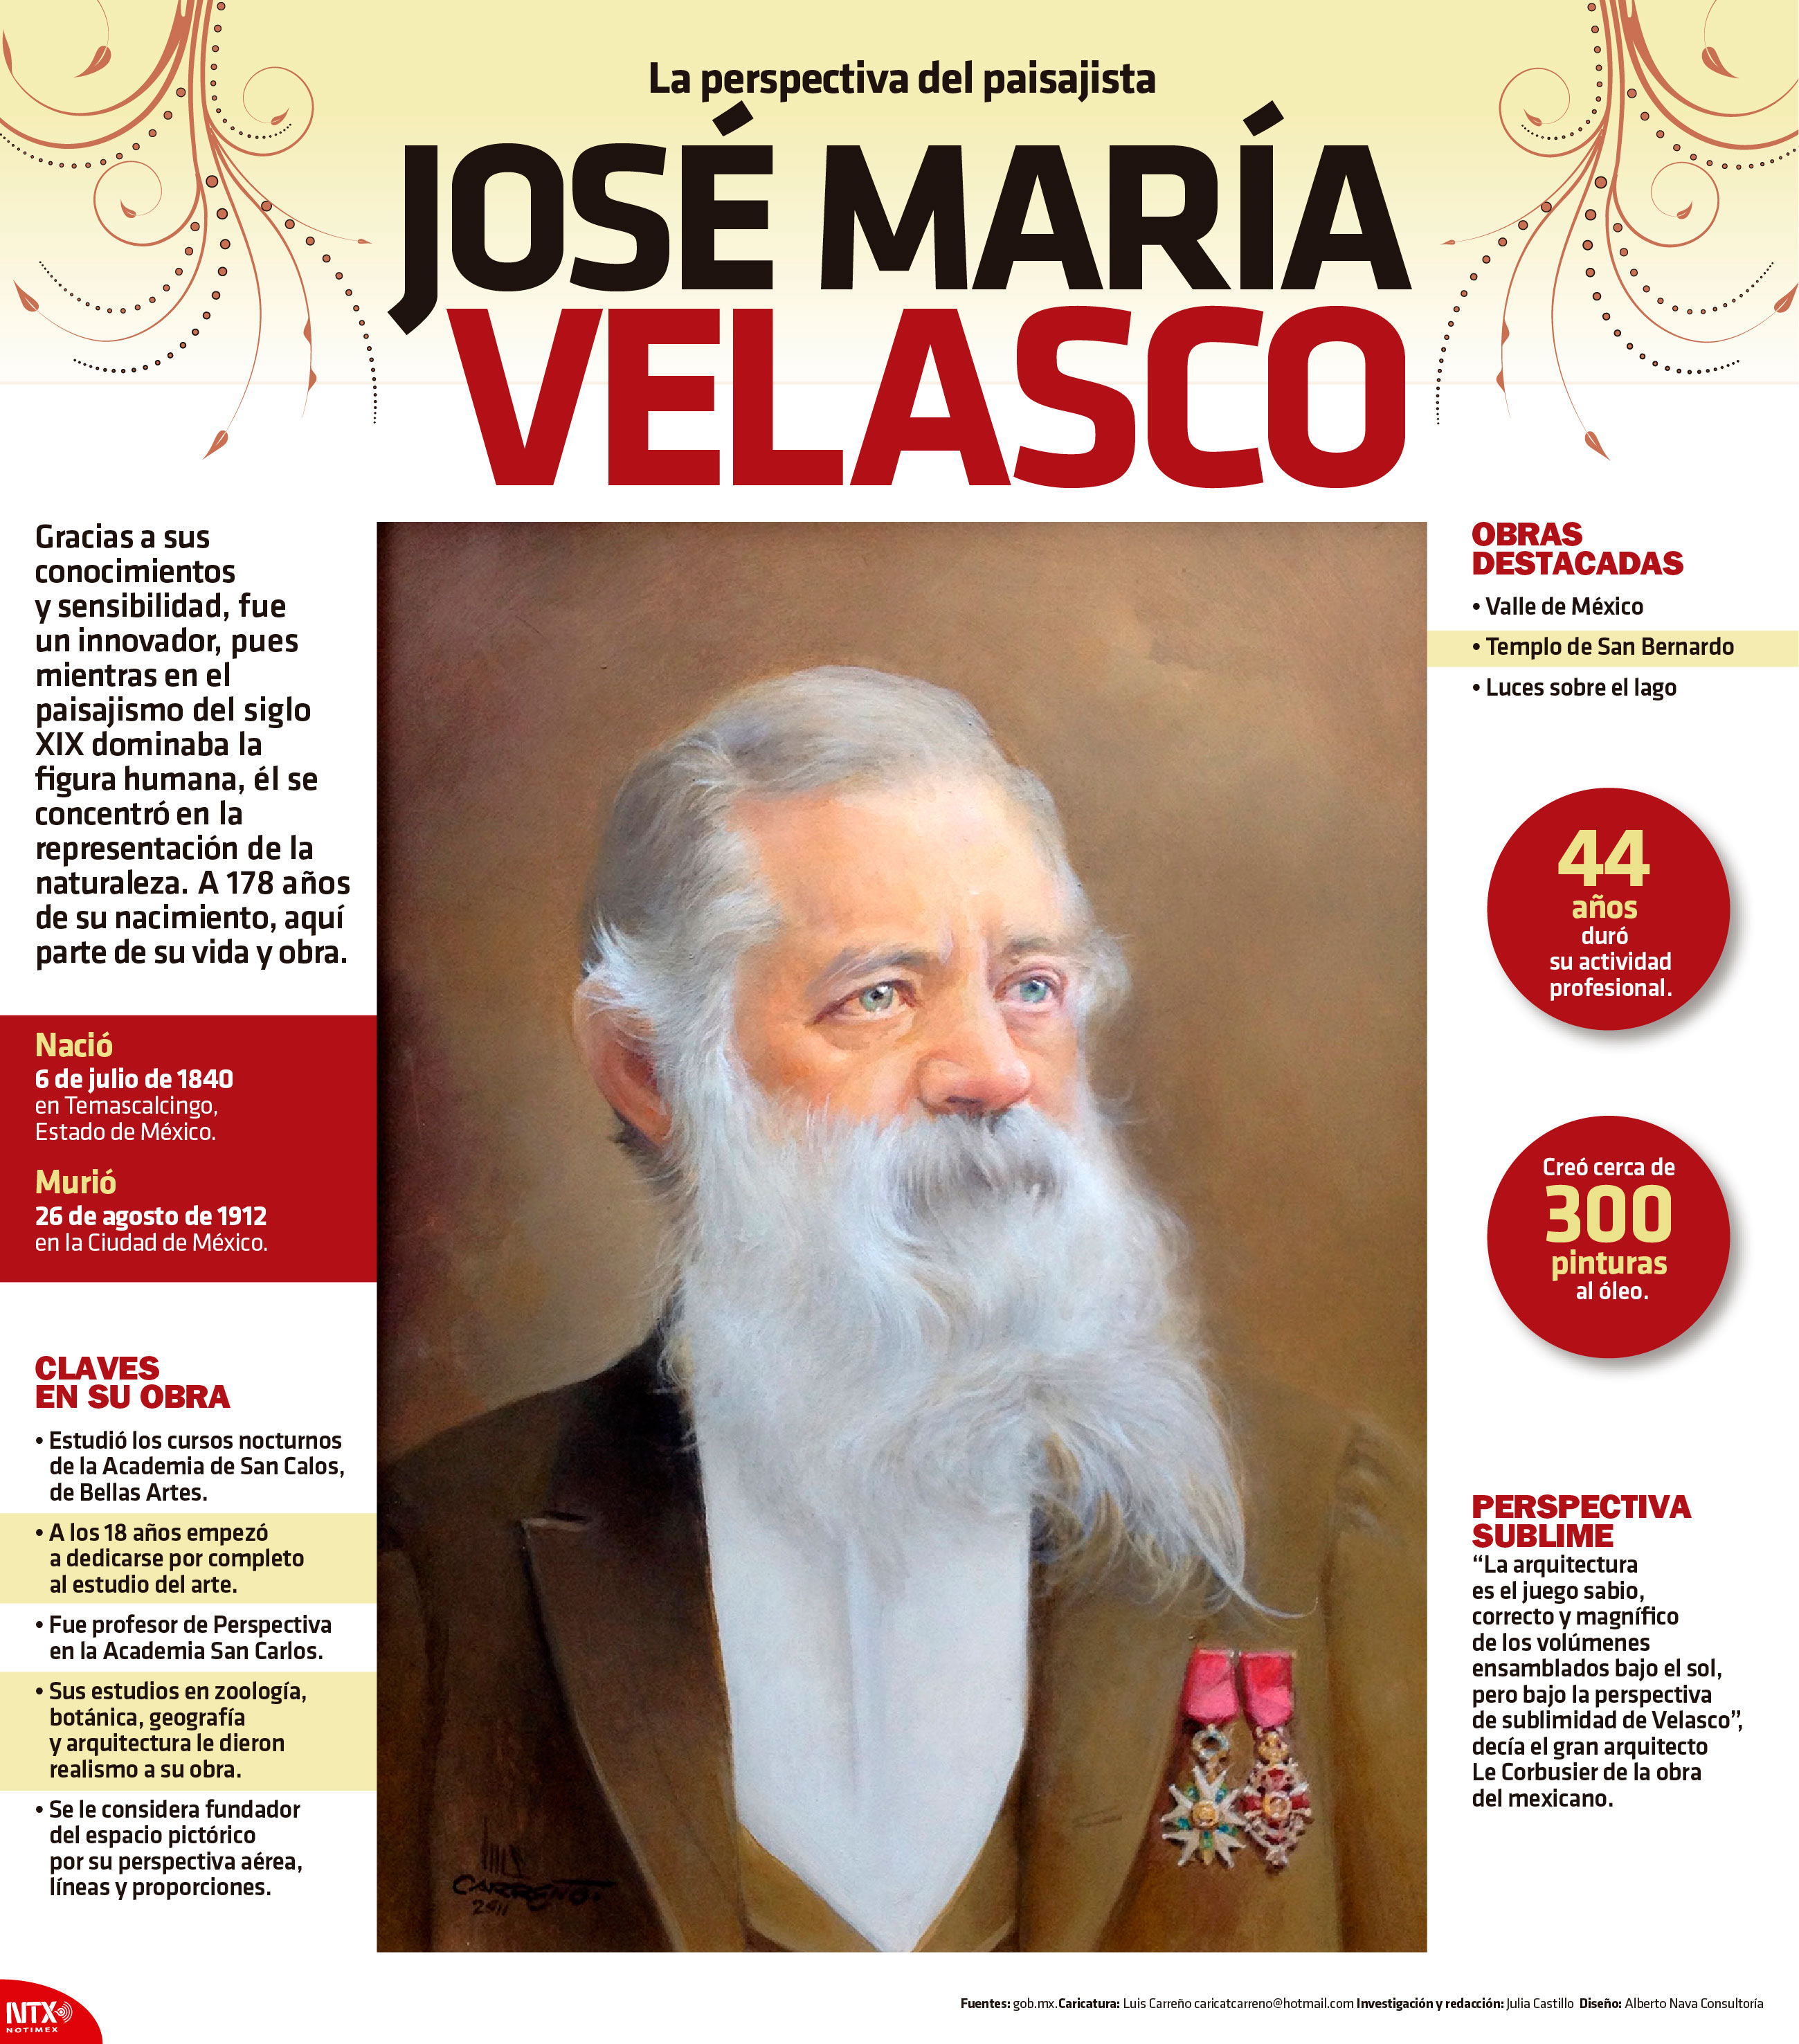 Jos Maria Velasco